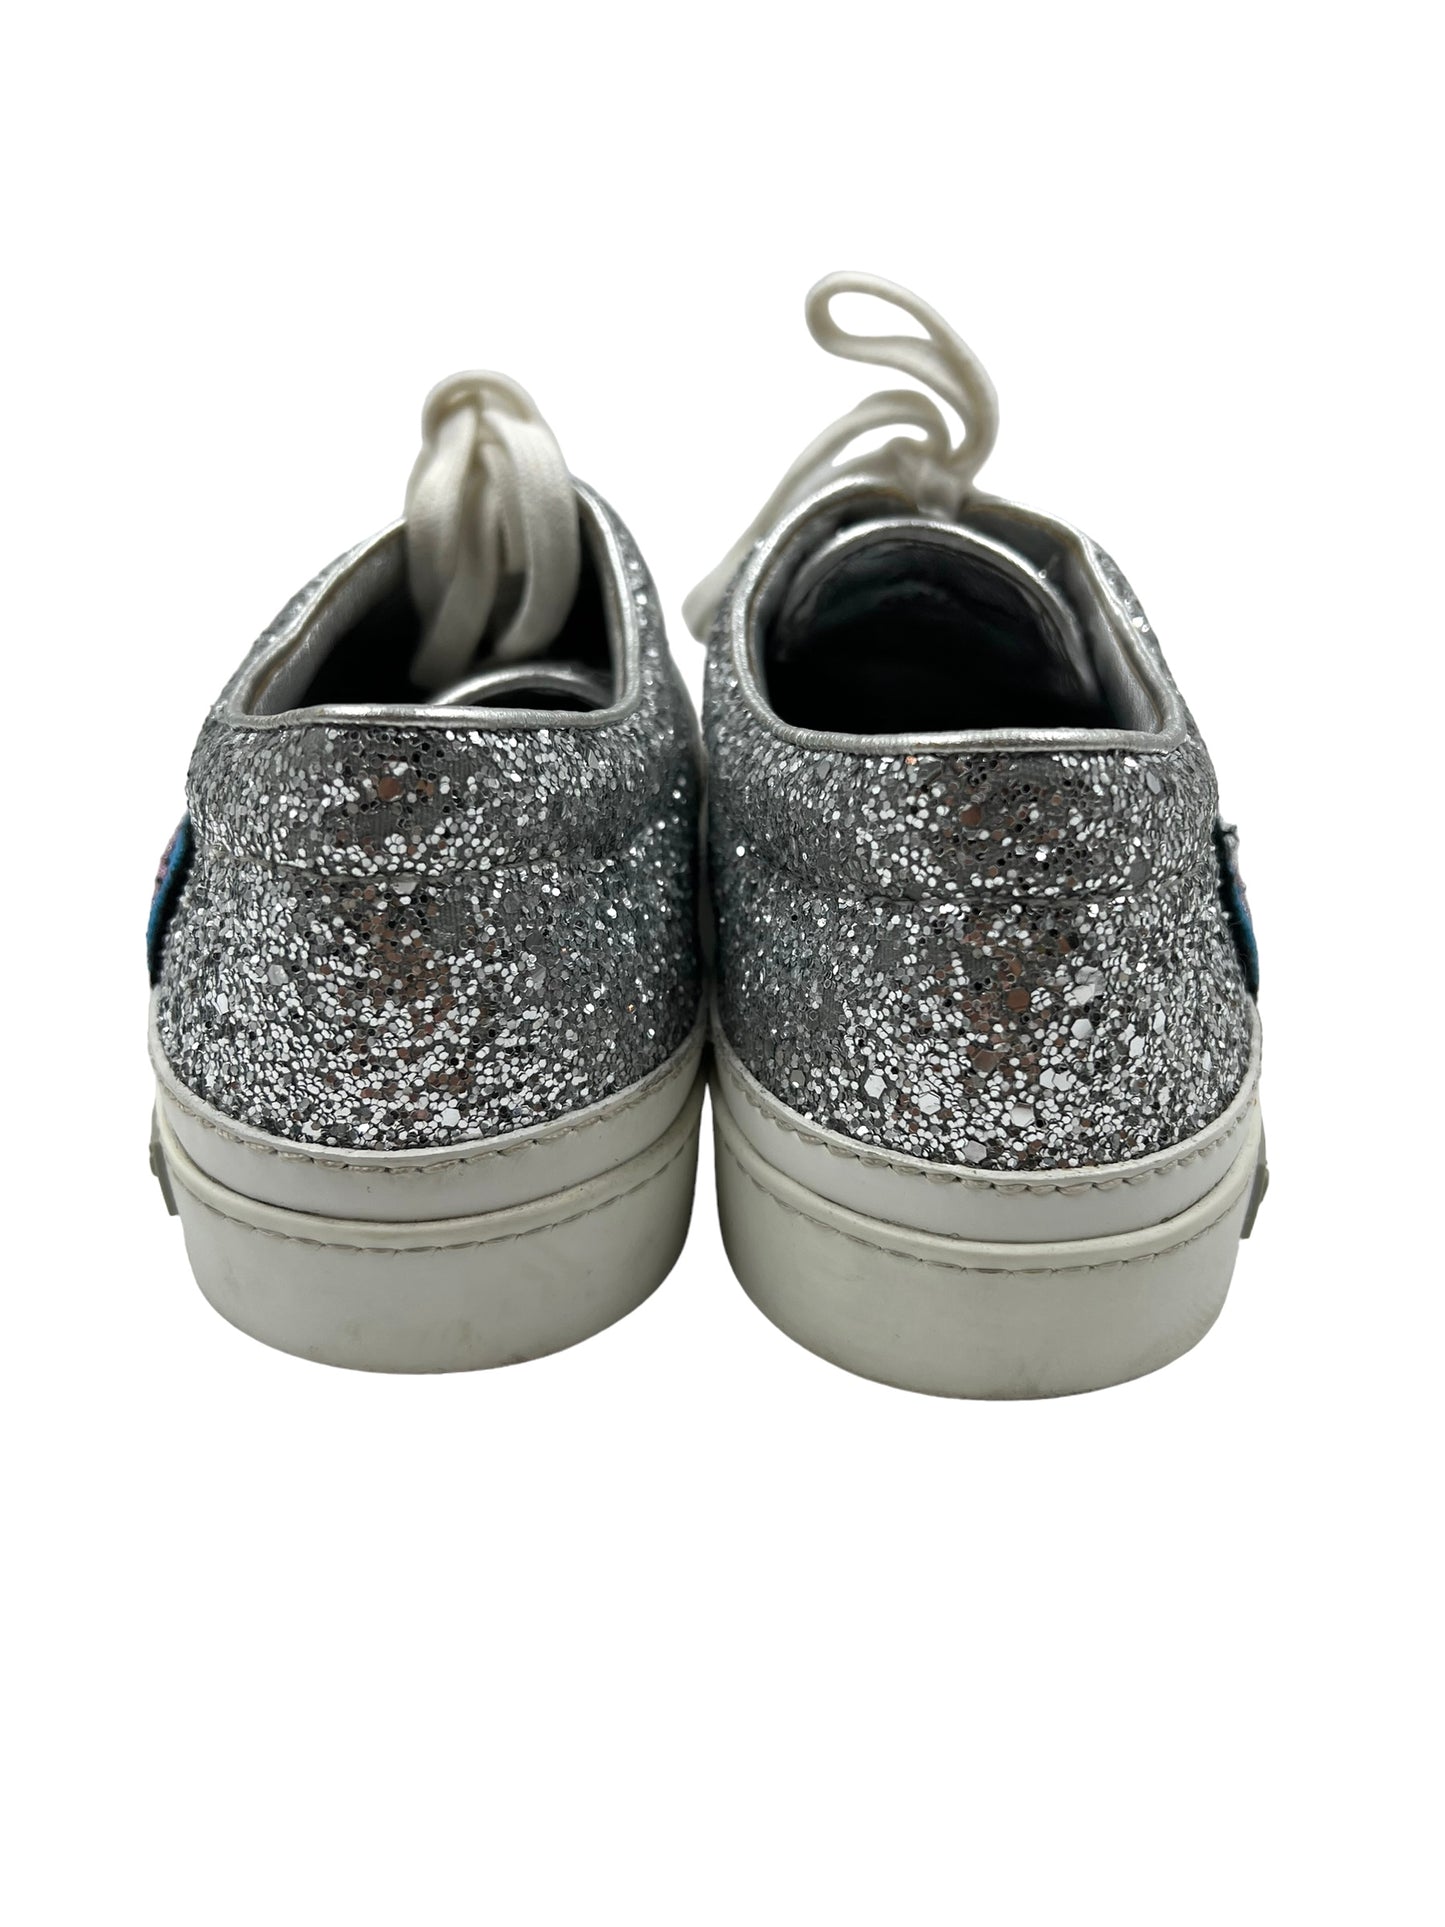 Miu Miu Silver Size 39 Low Top Glitter Sneakers